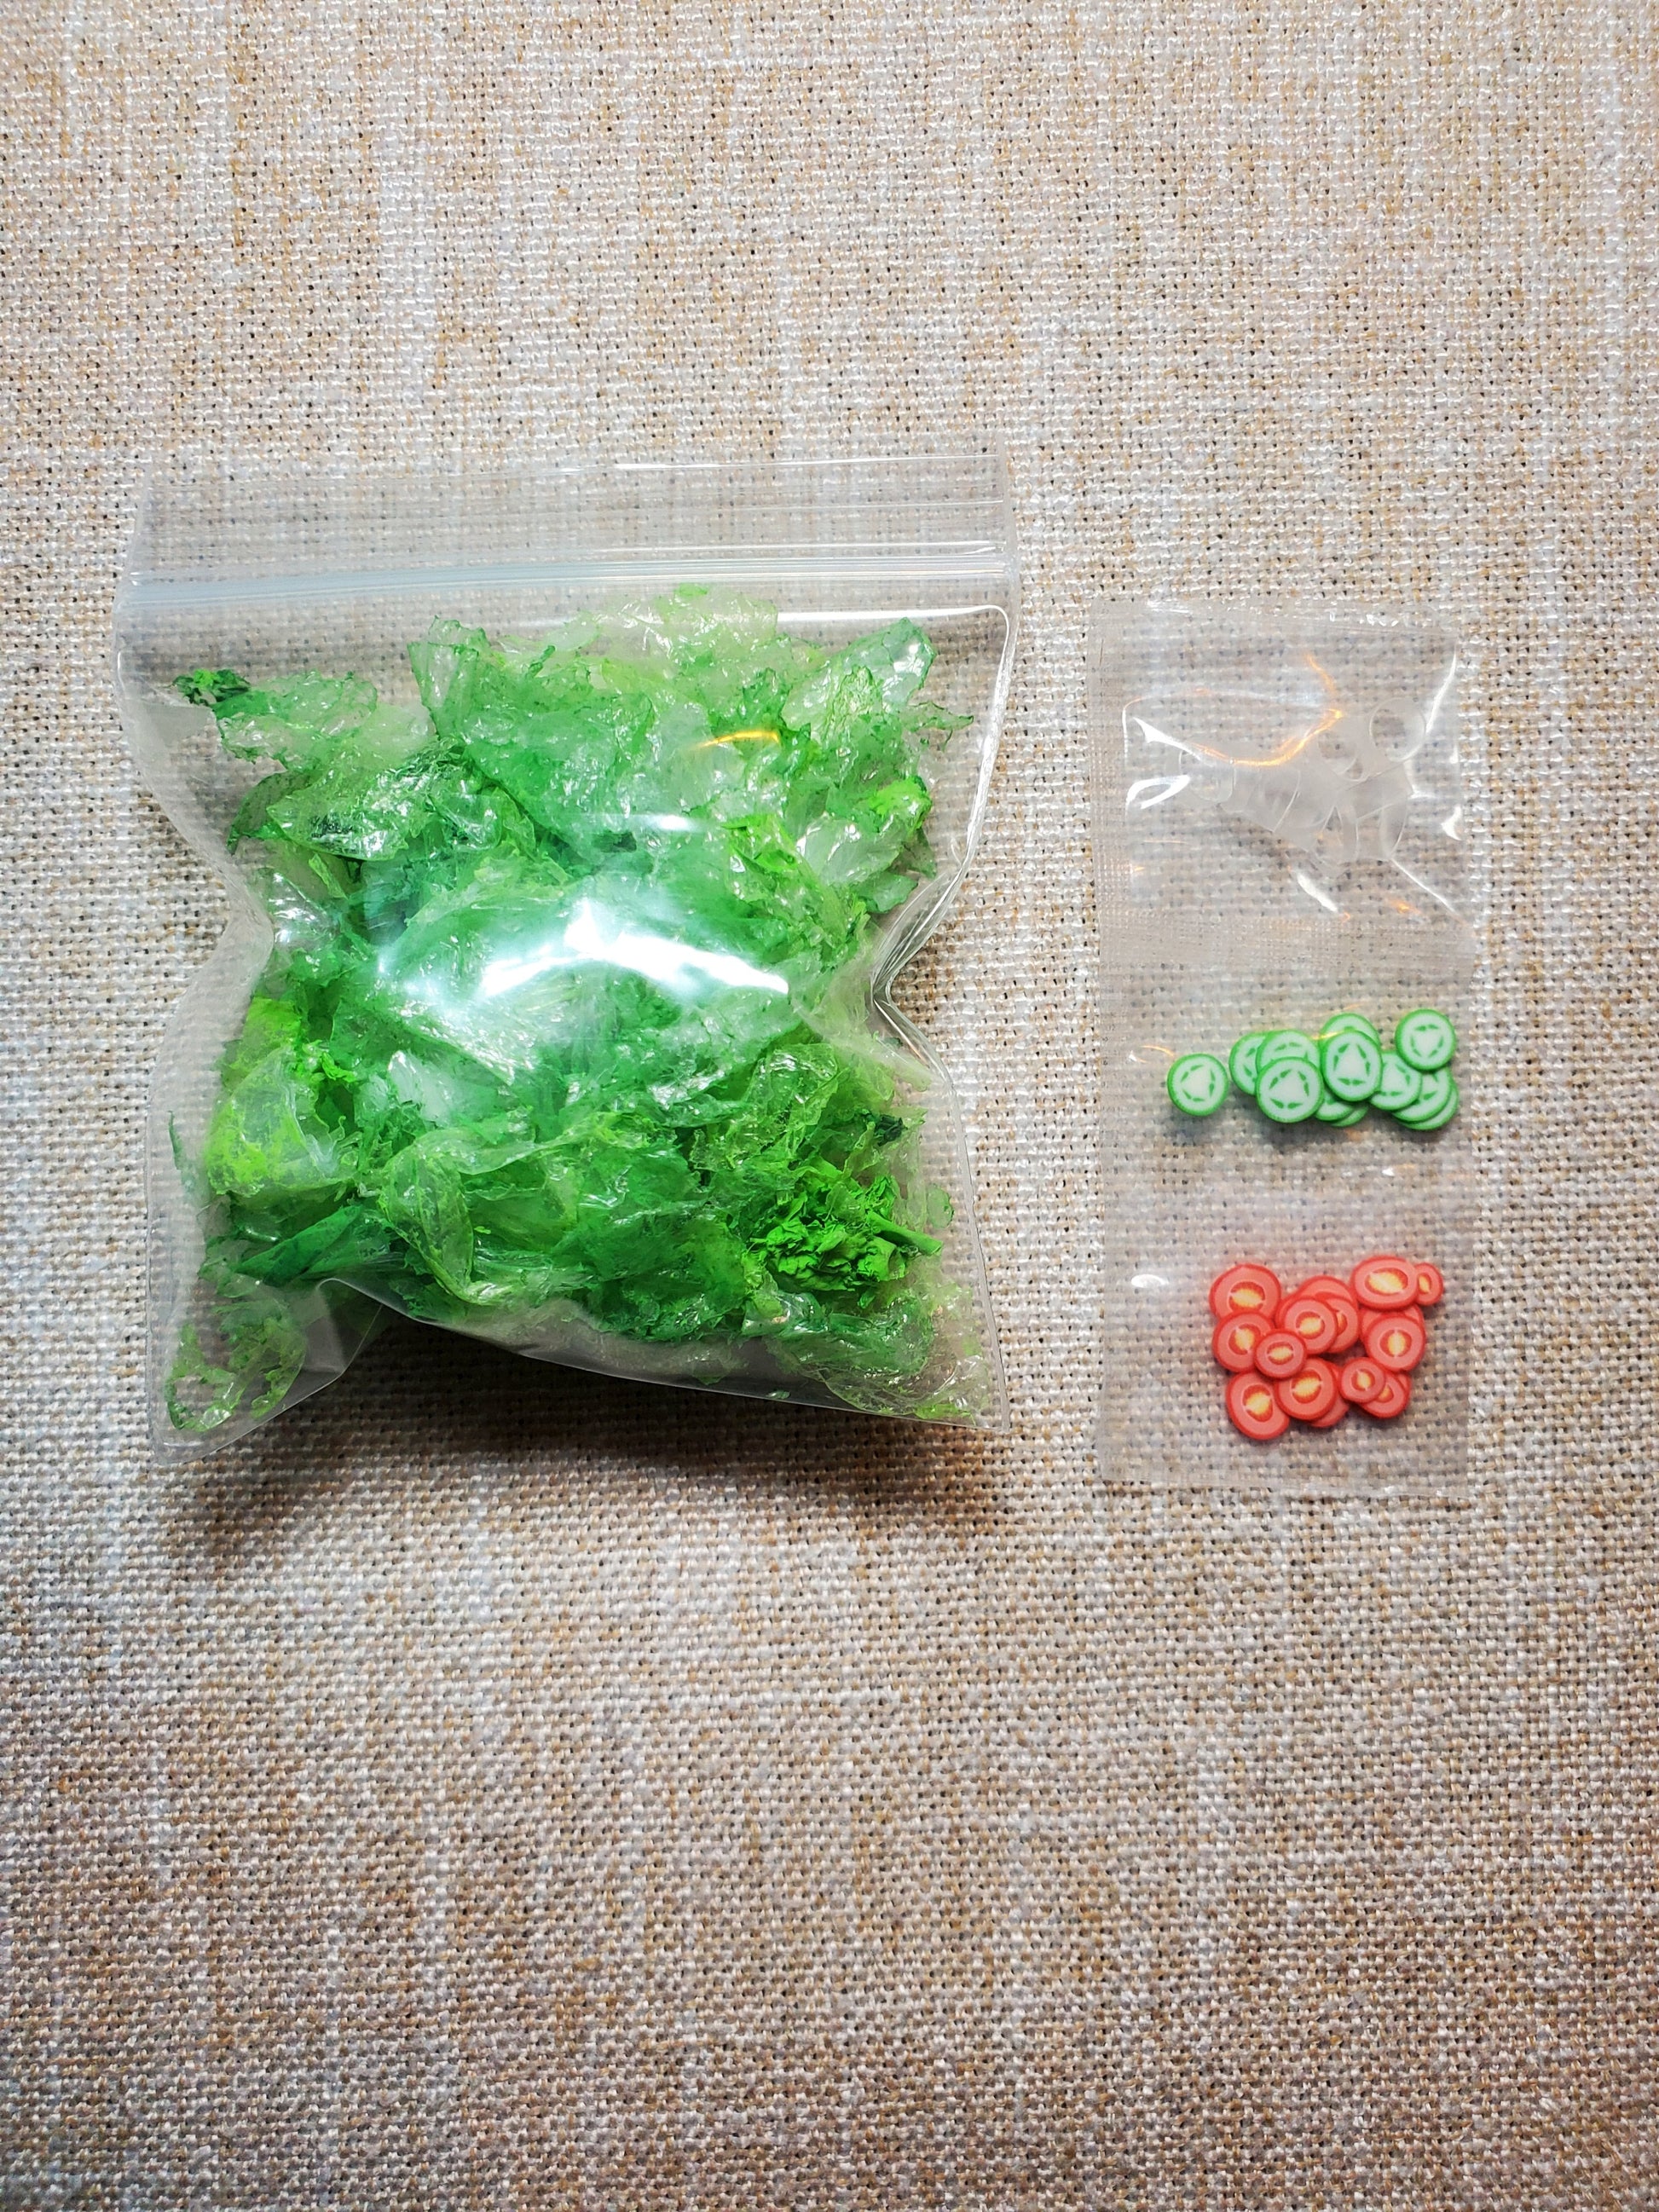 salad kit with sliced veggies